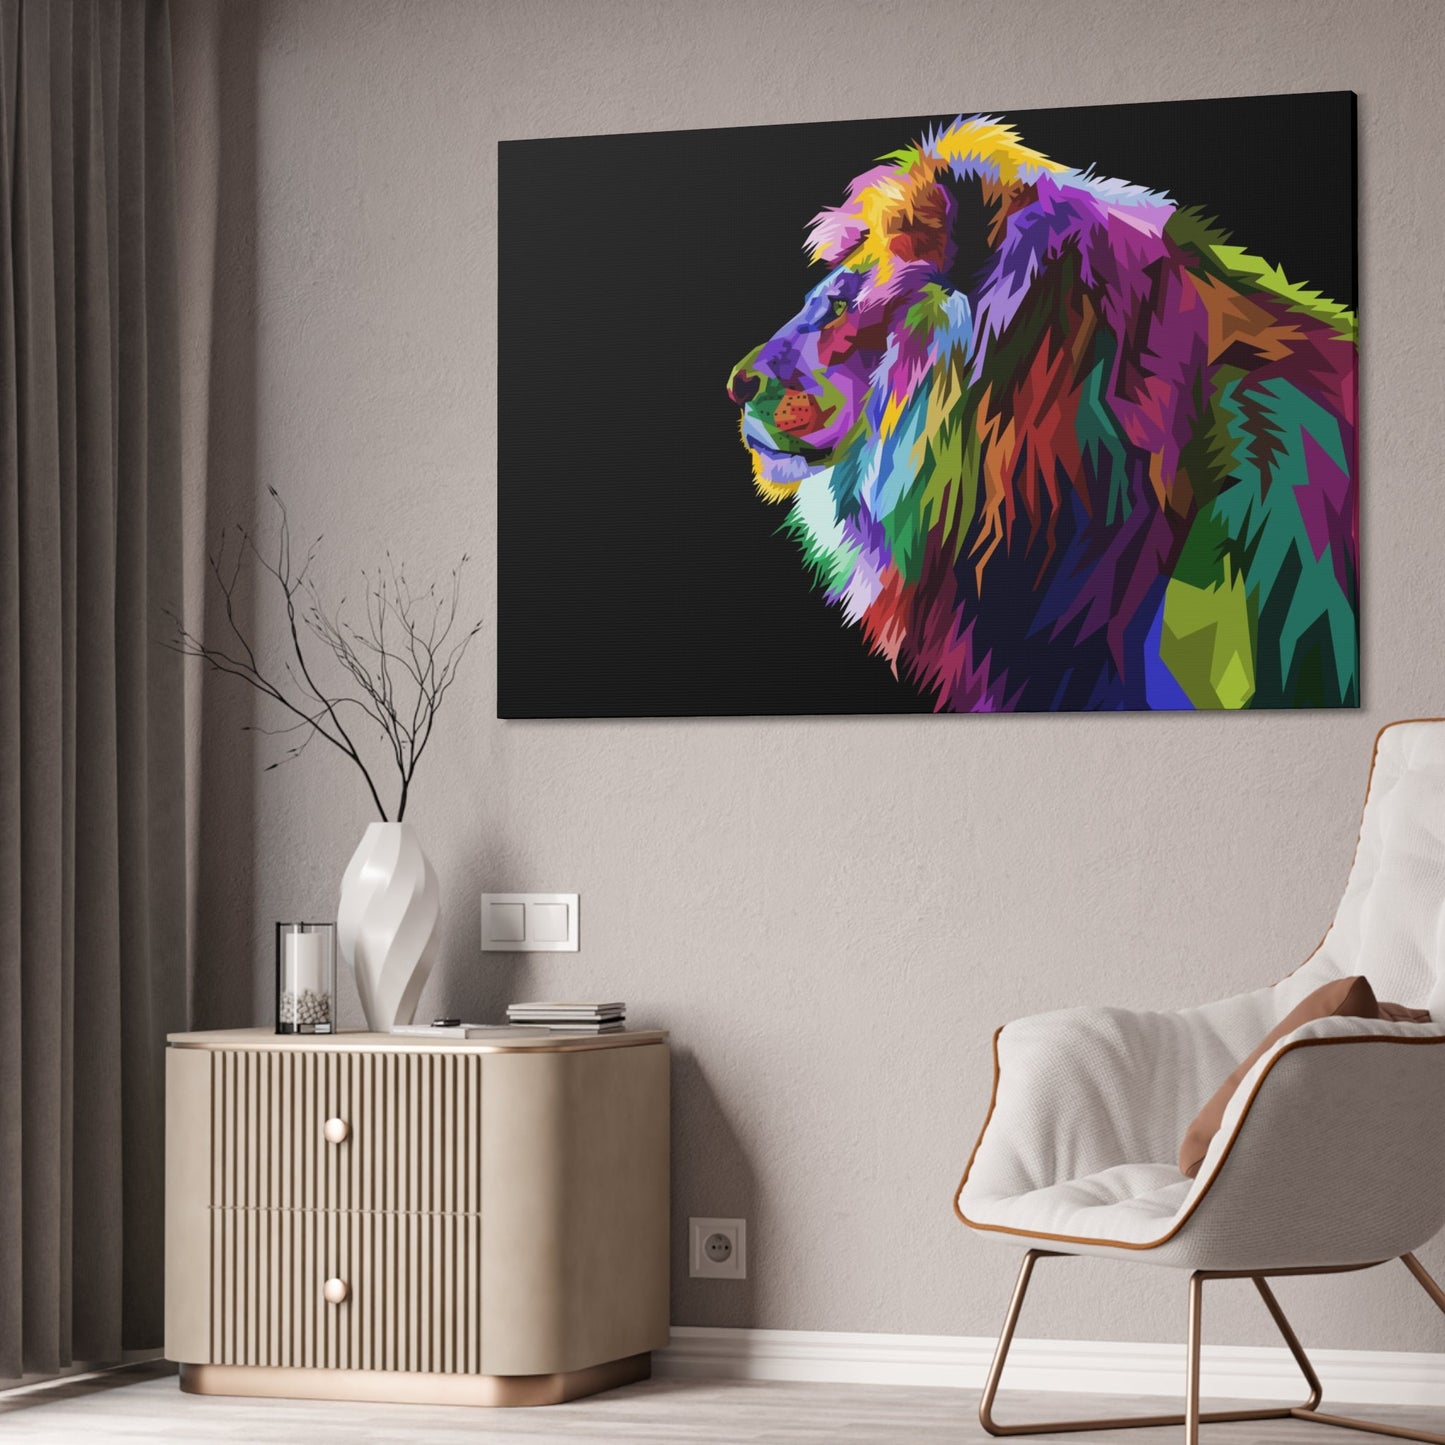 Royal Majesty: Artistic Print on Framed Canvas of a Regal Lion